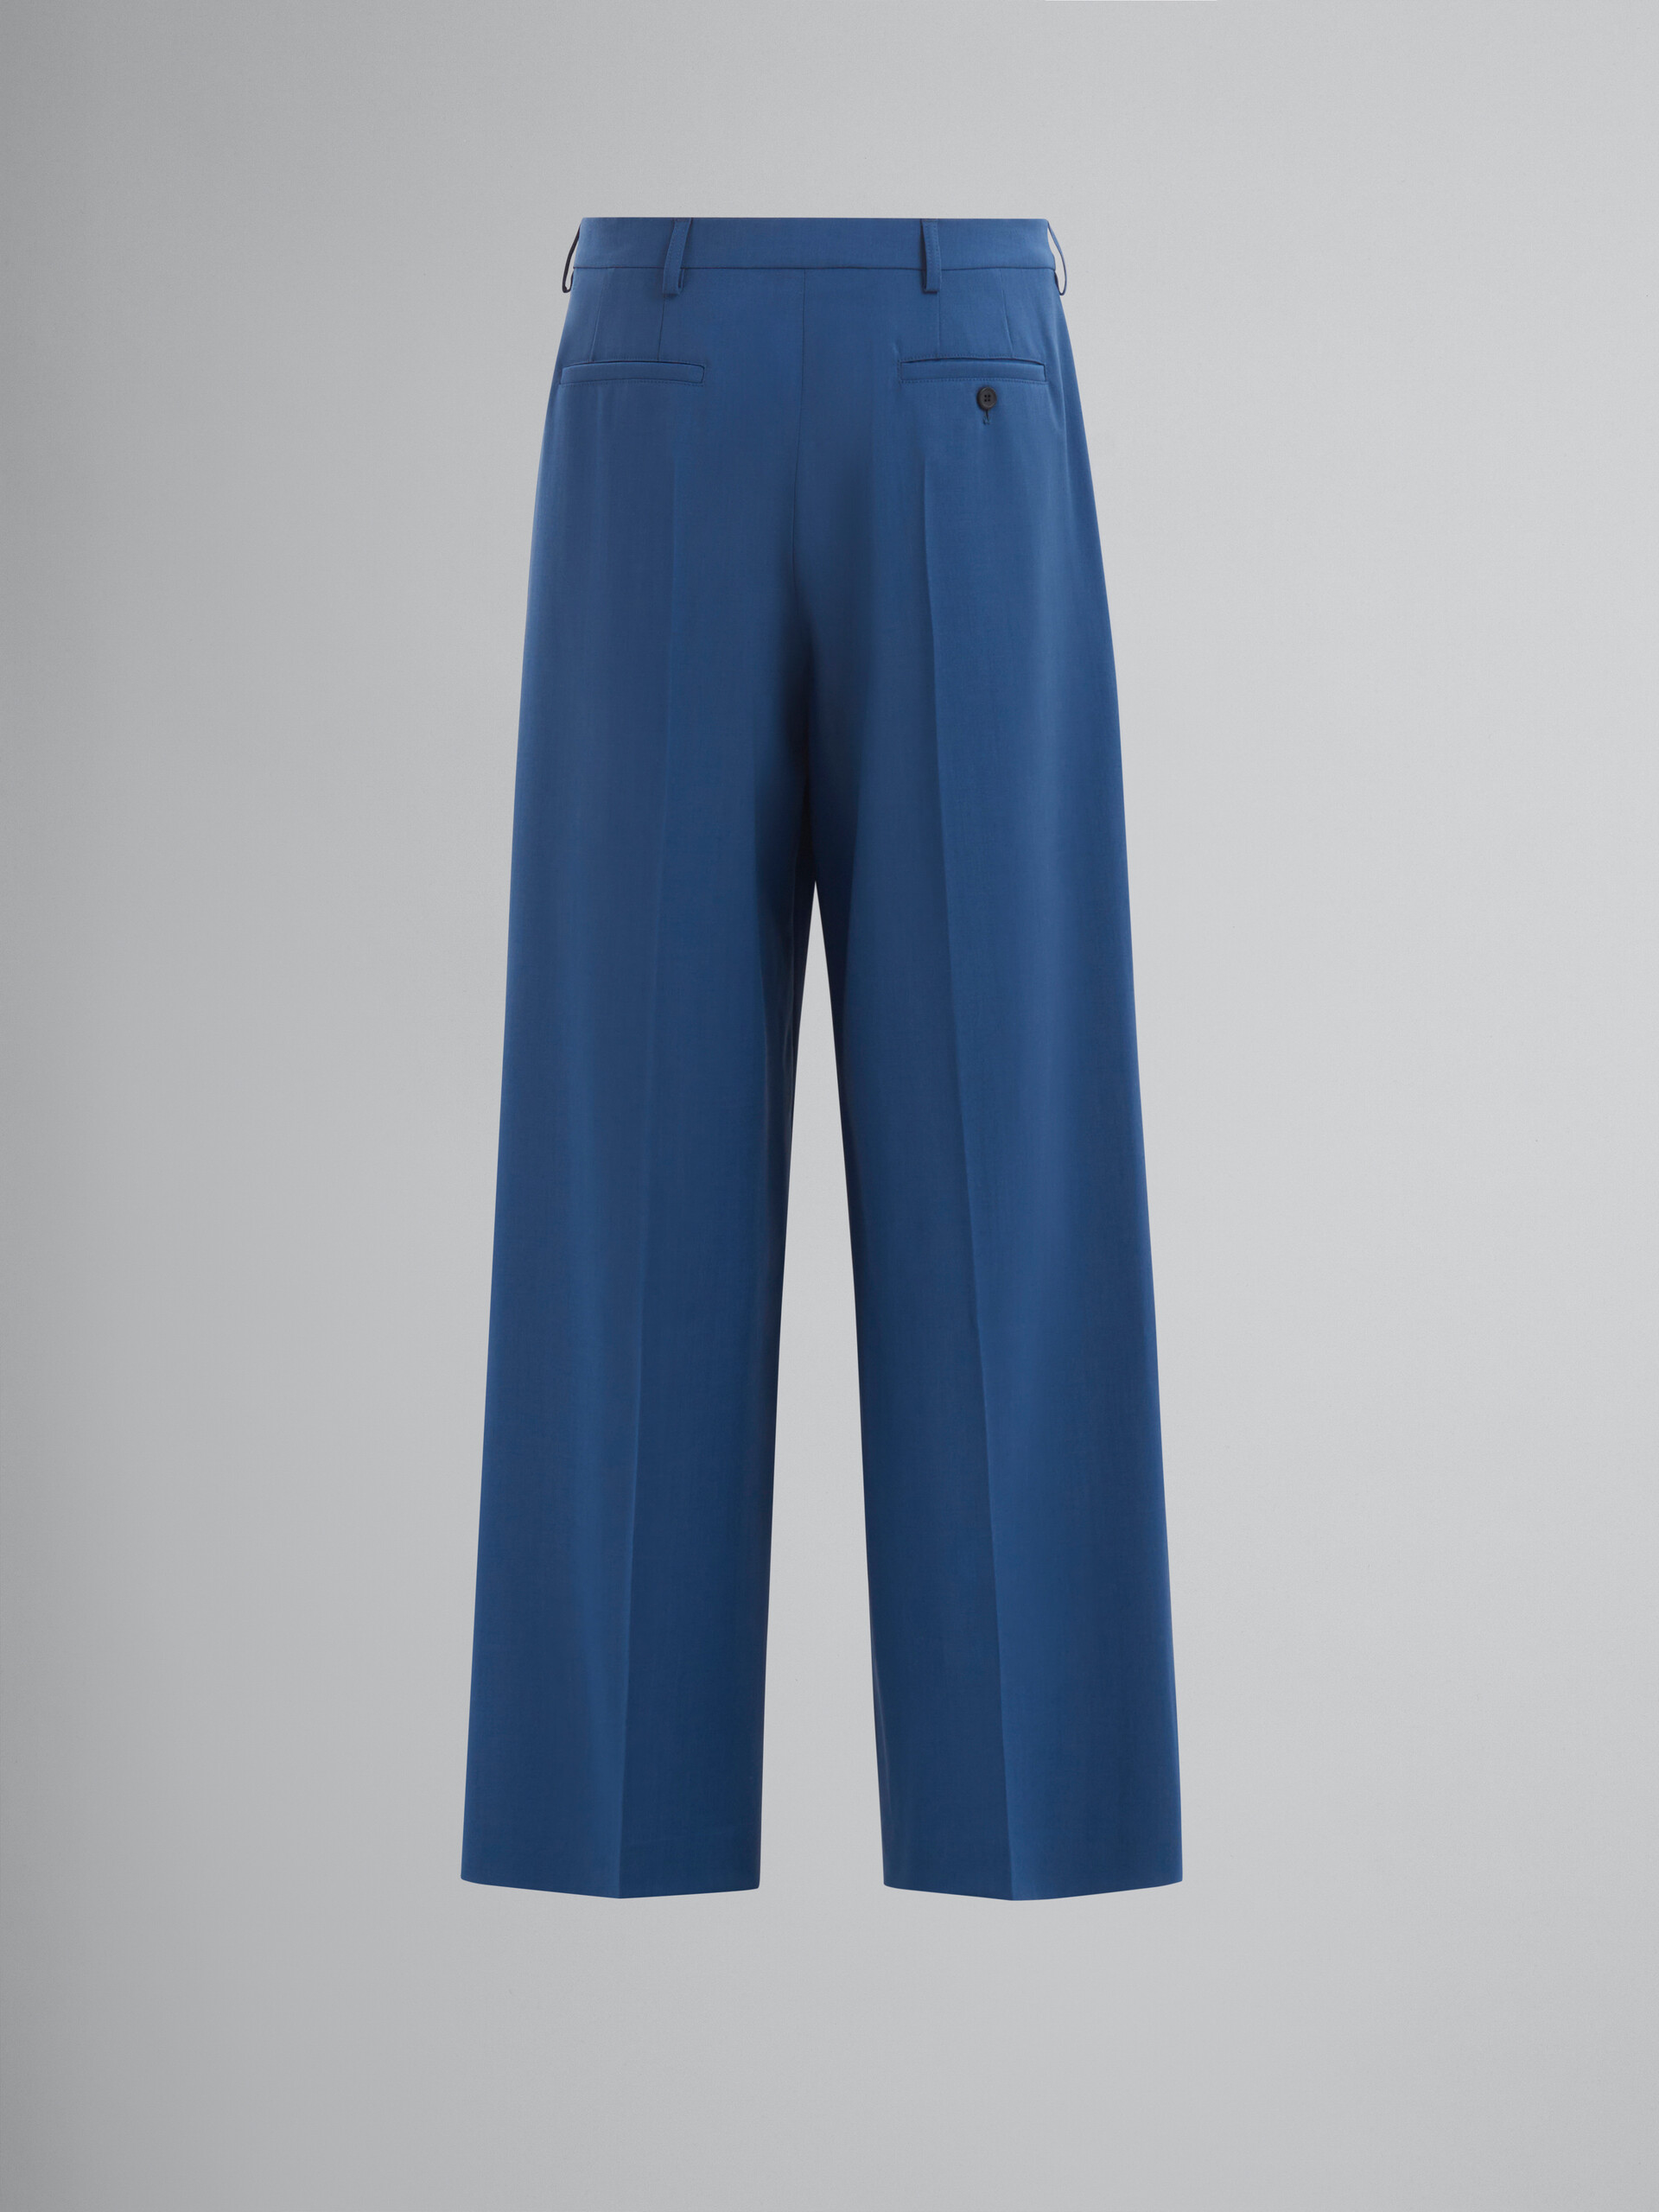 Pantalon en laine mohair bleue avec plis - Pantalons - Image 2